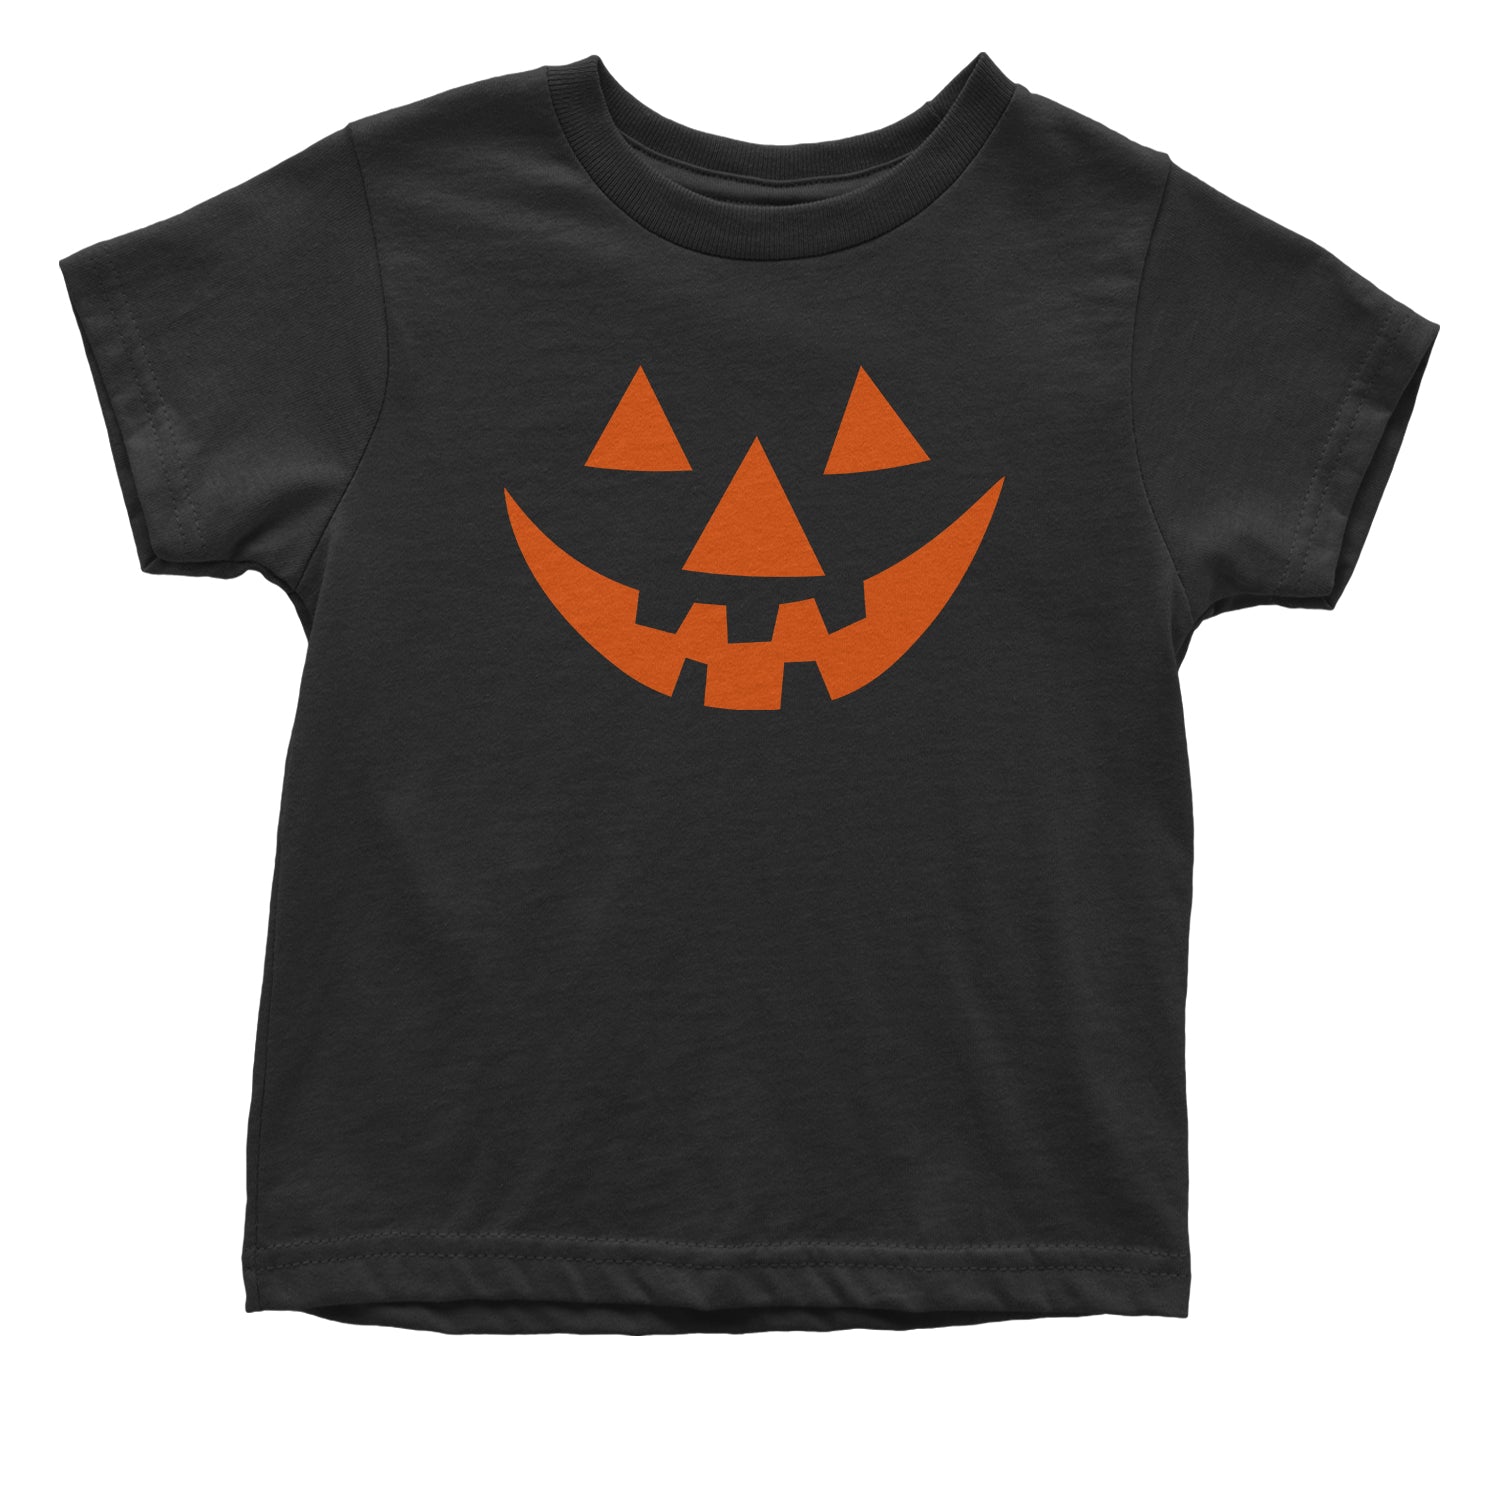 Pumpkin Face (Orange Print) Toddler T-Shirt costume, dress, dressup, eve, halloween, hallows, jackolantern, party, up by Expression Tees